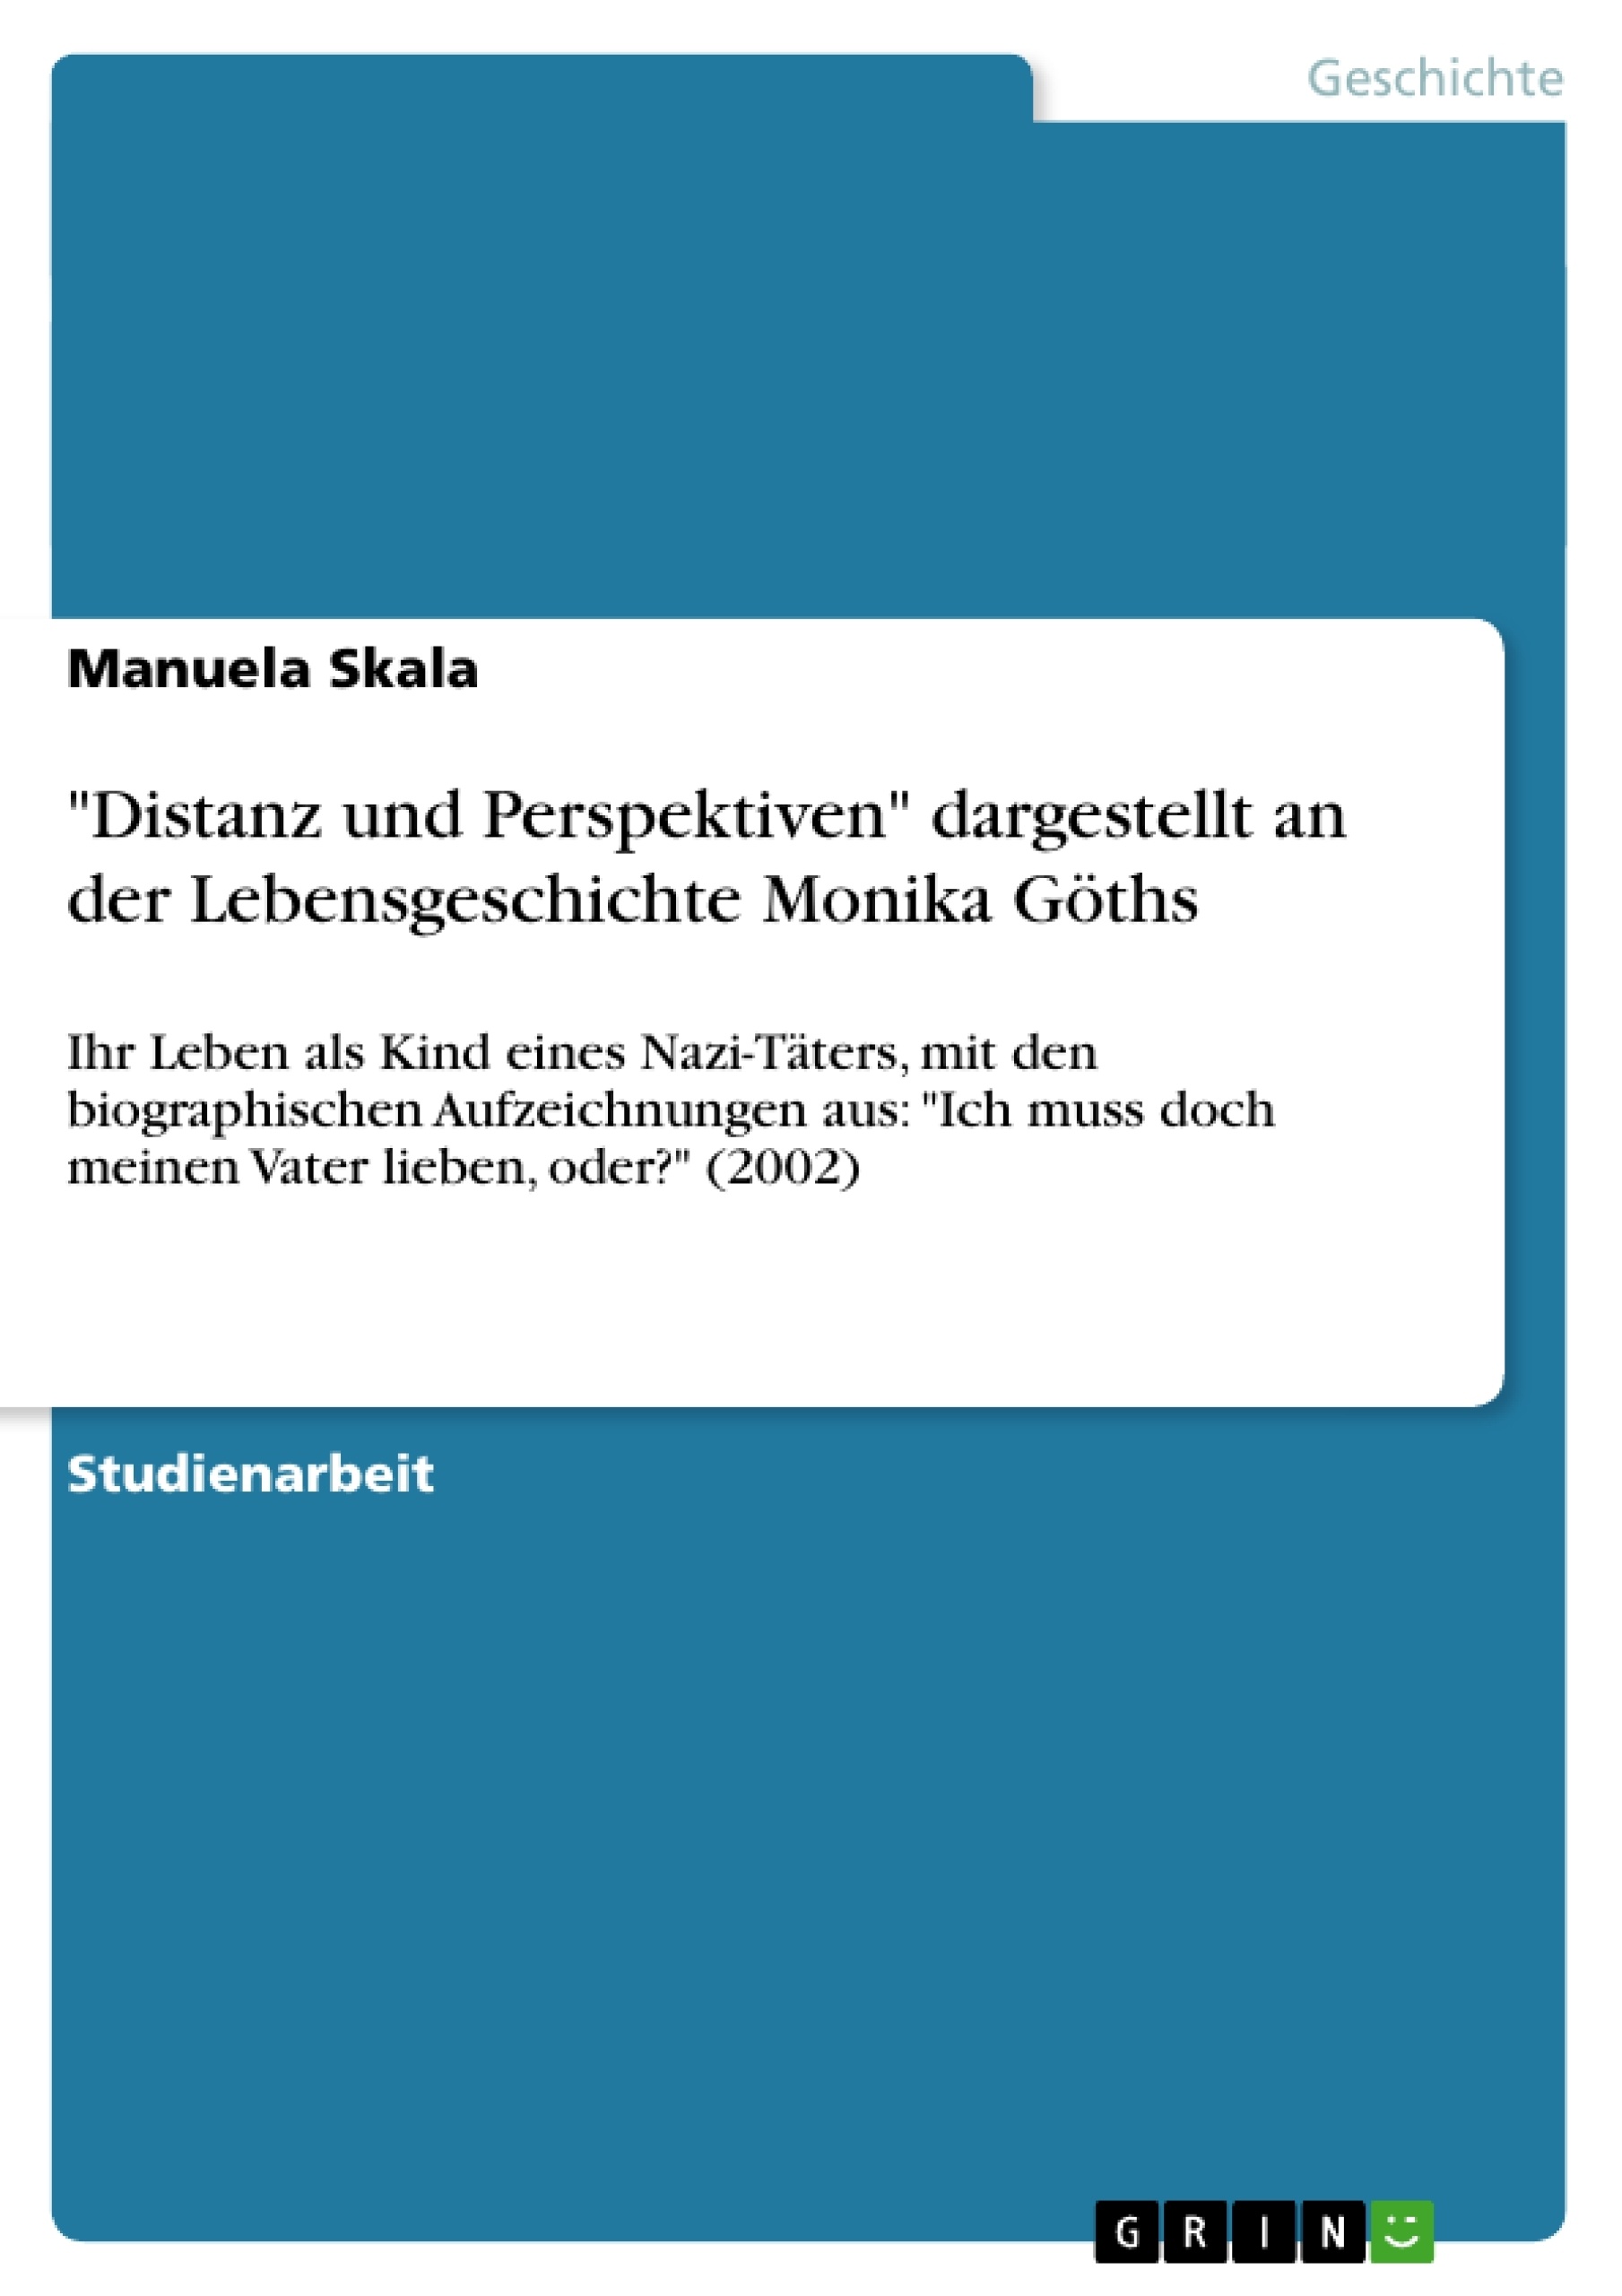 Title: "Distanz und Perspektiven" dargestellt an der Lebensgeschichte Monika Göths